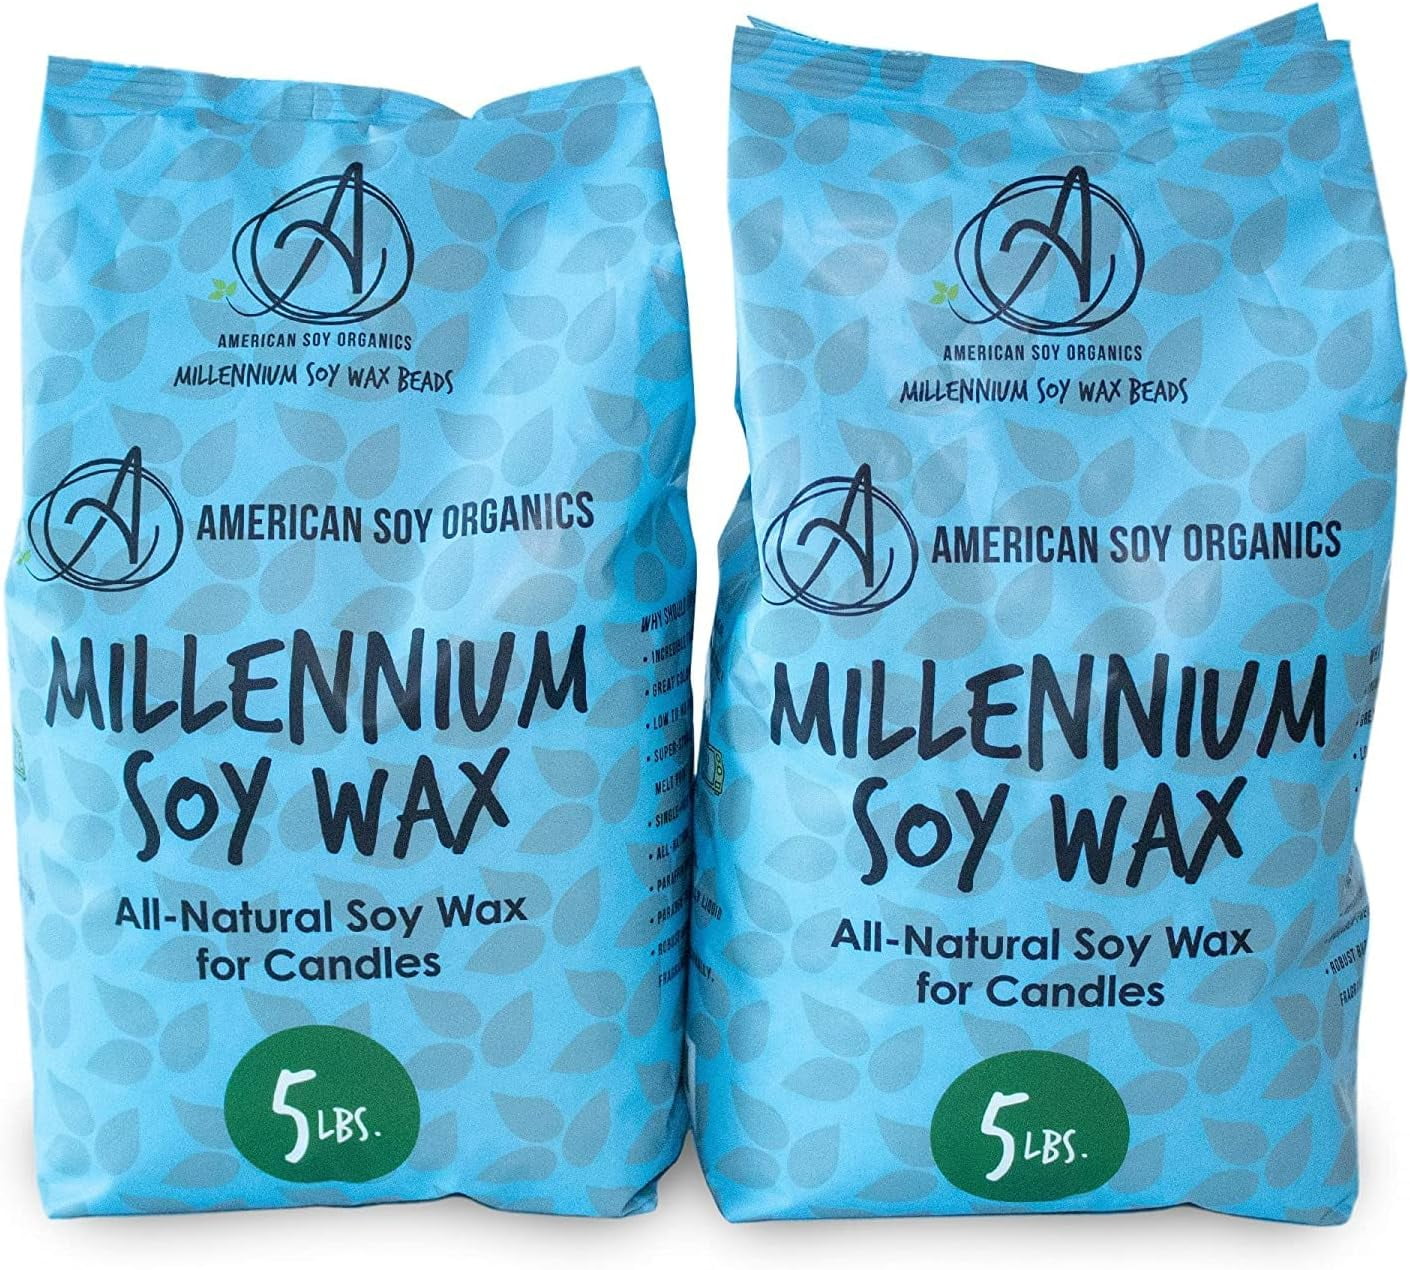 All Natural Soy Wax Melt 5 oz Bags